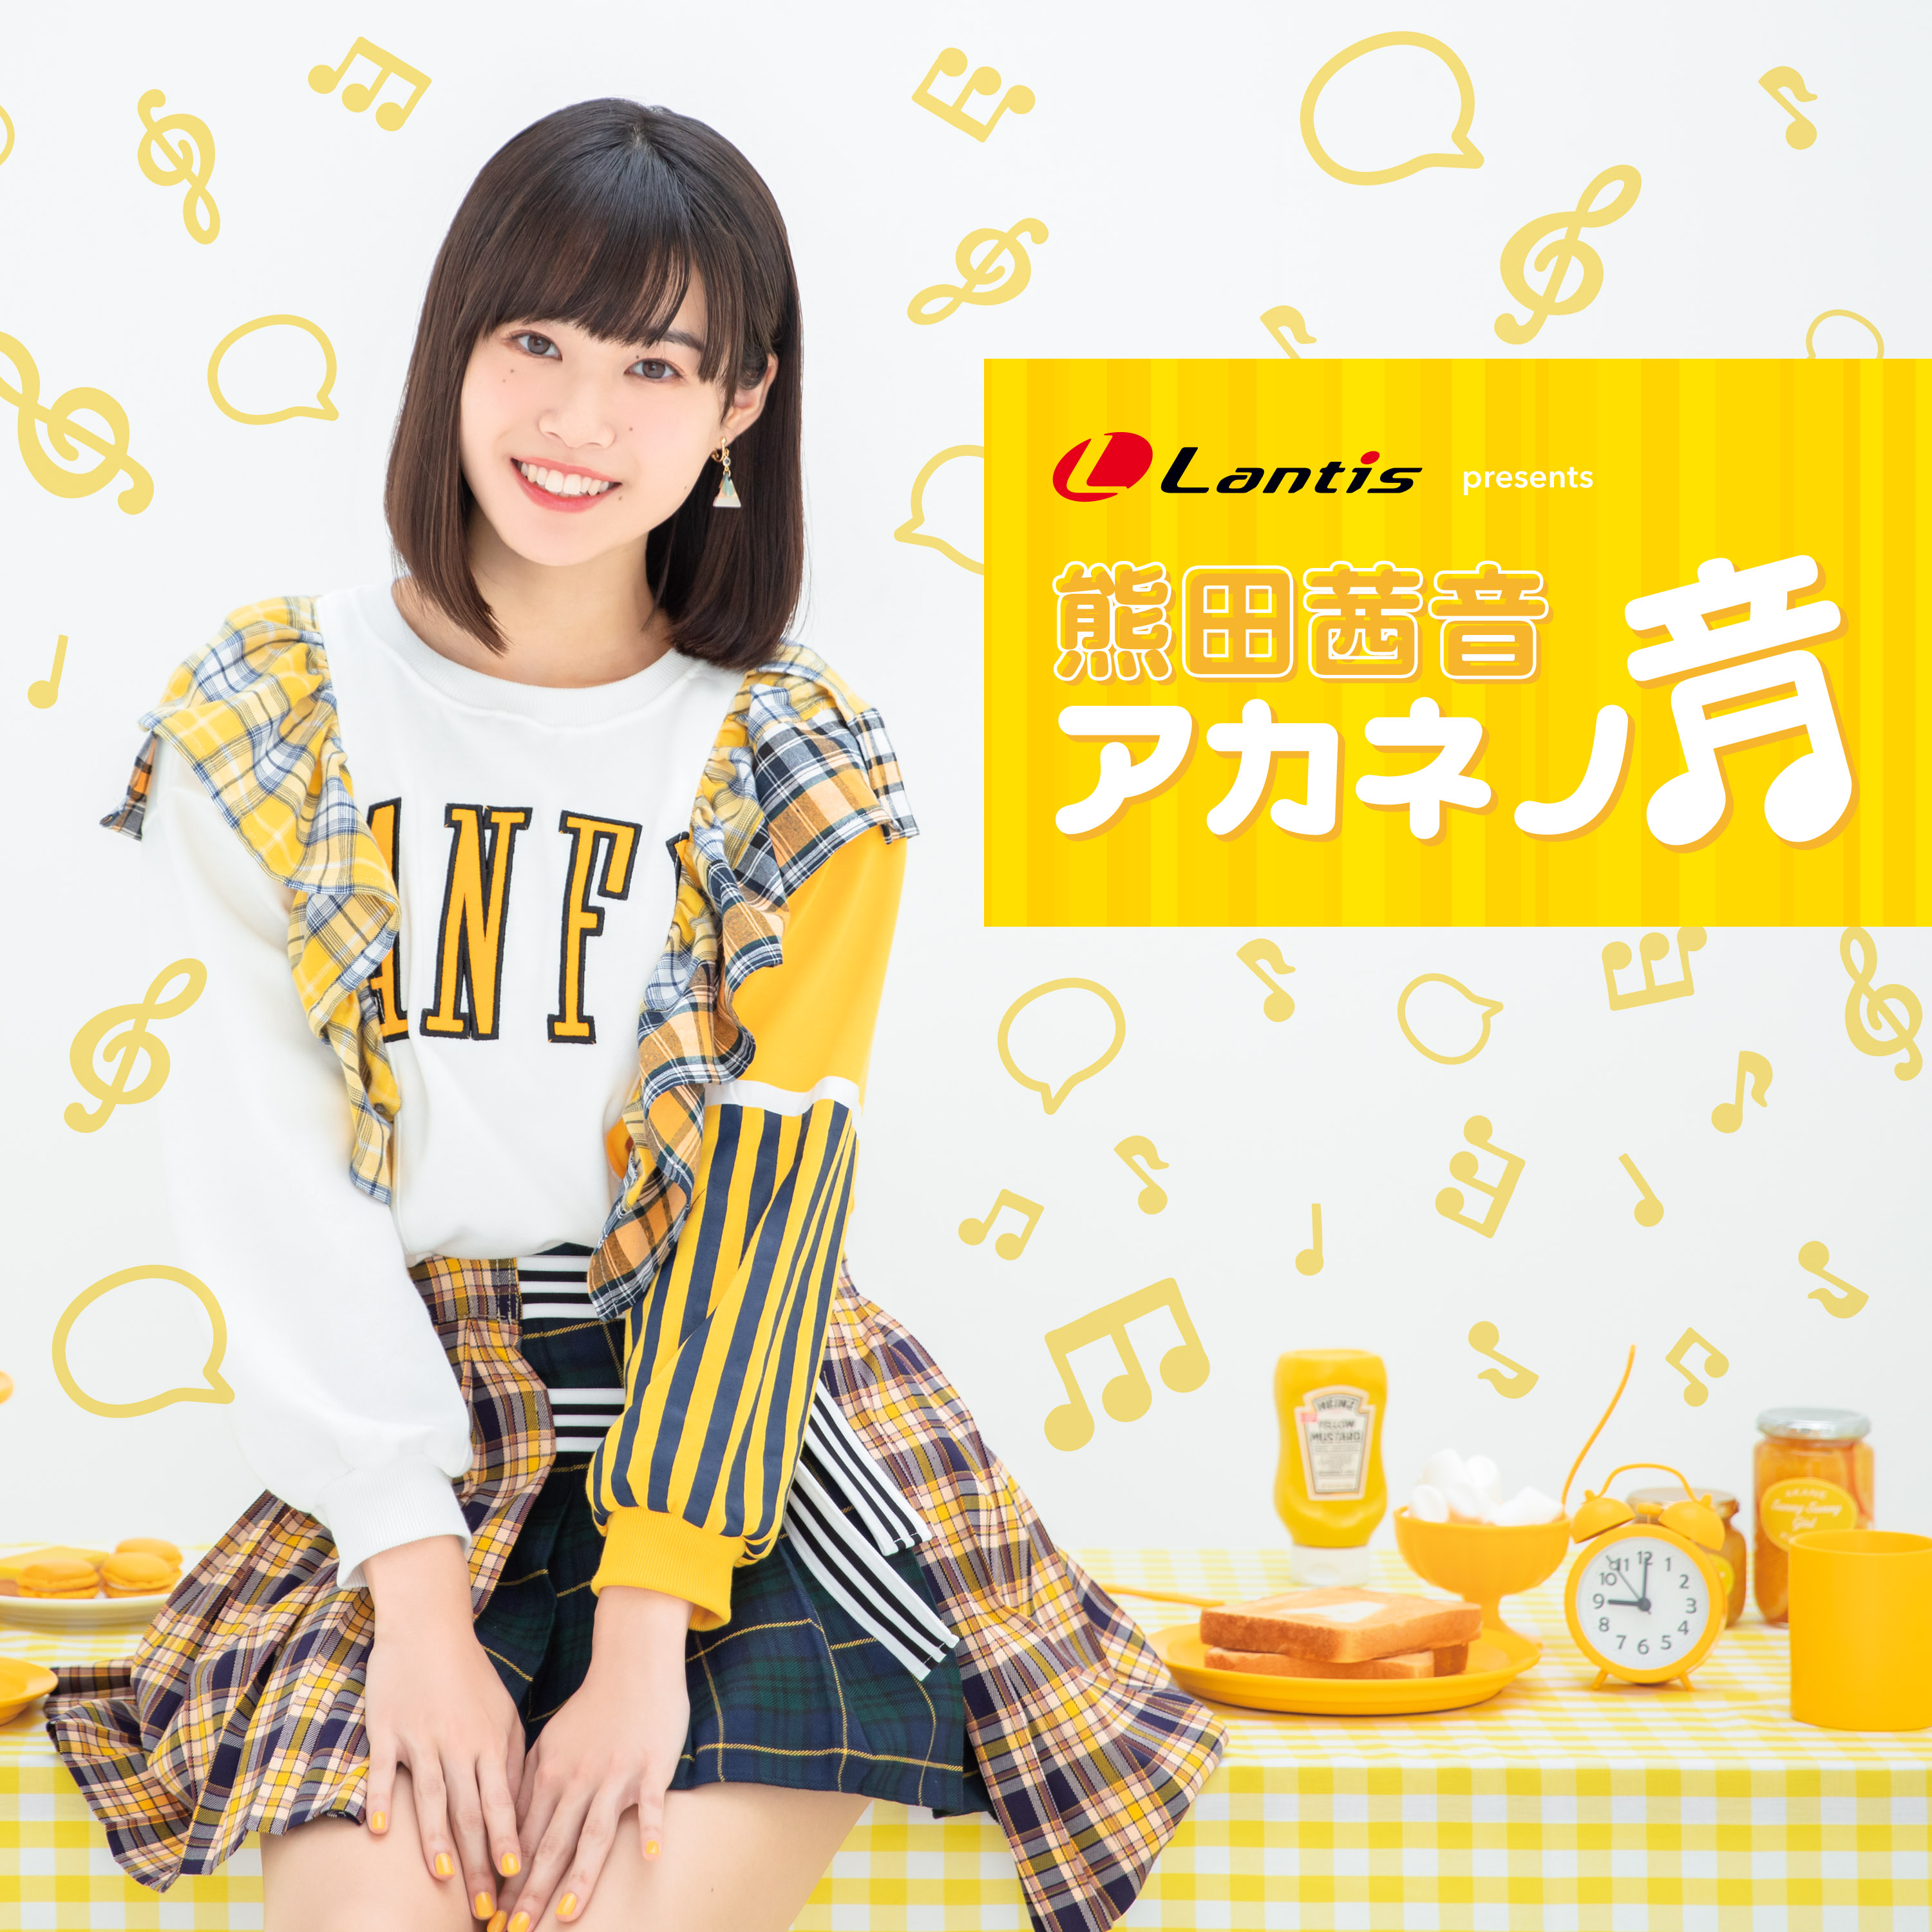 Lantis Presents 熊田茜音 アカネノ音 #235-238